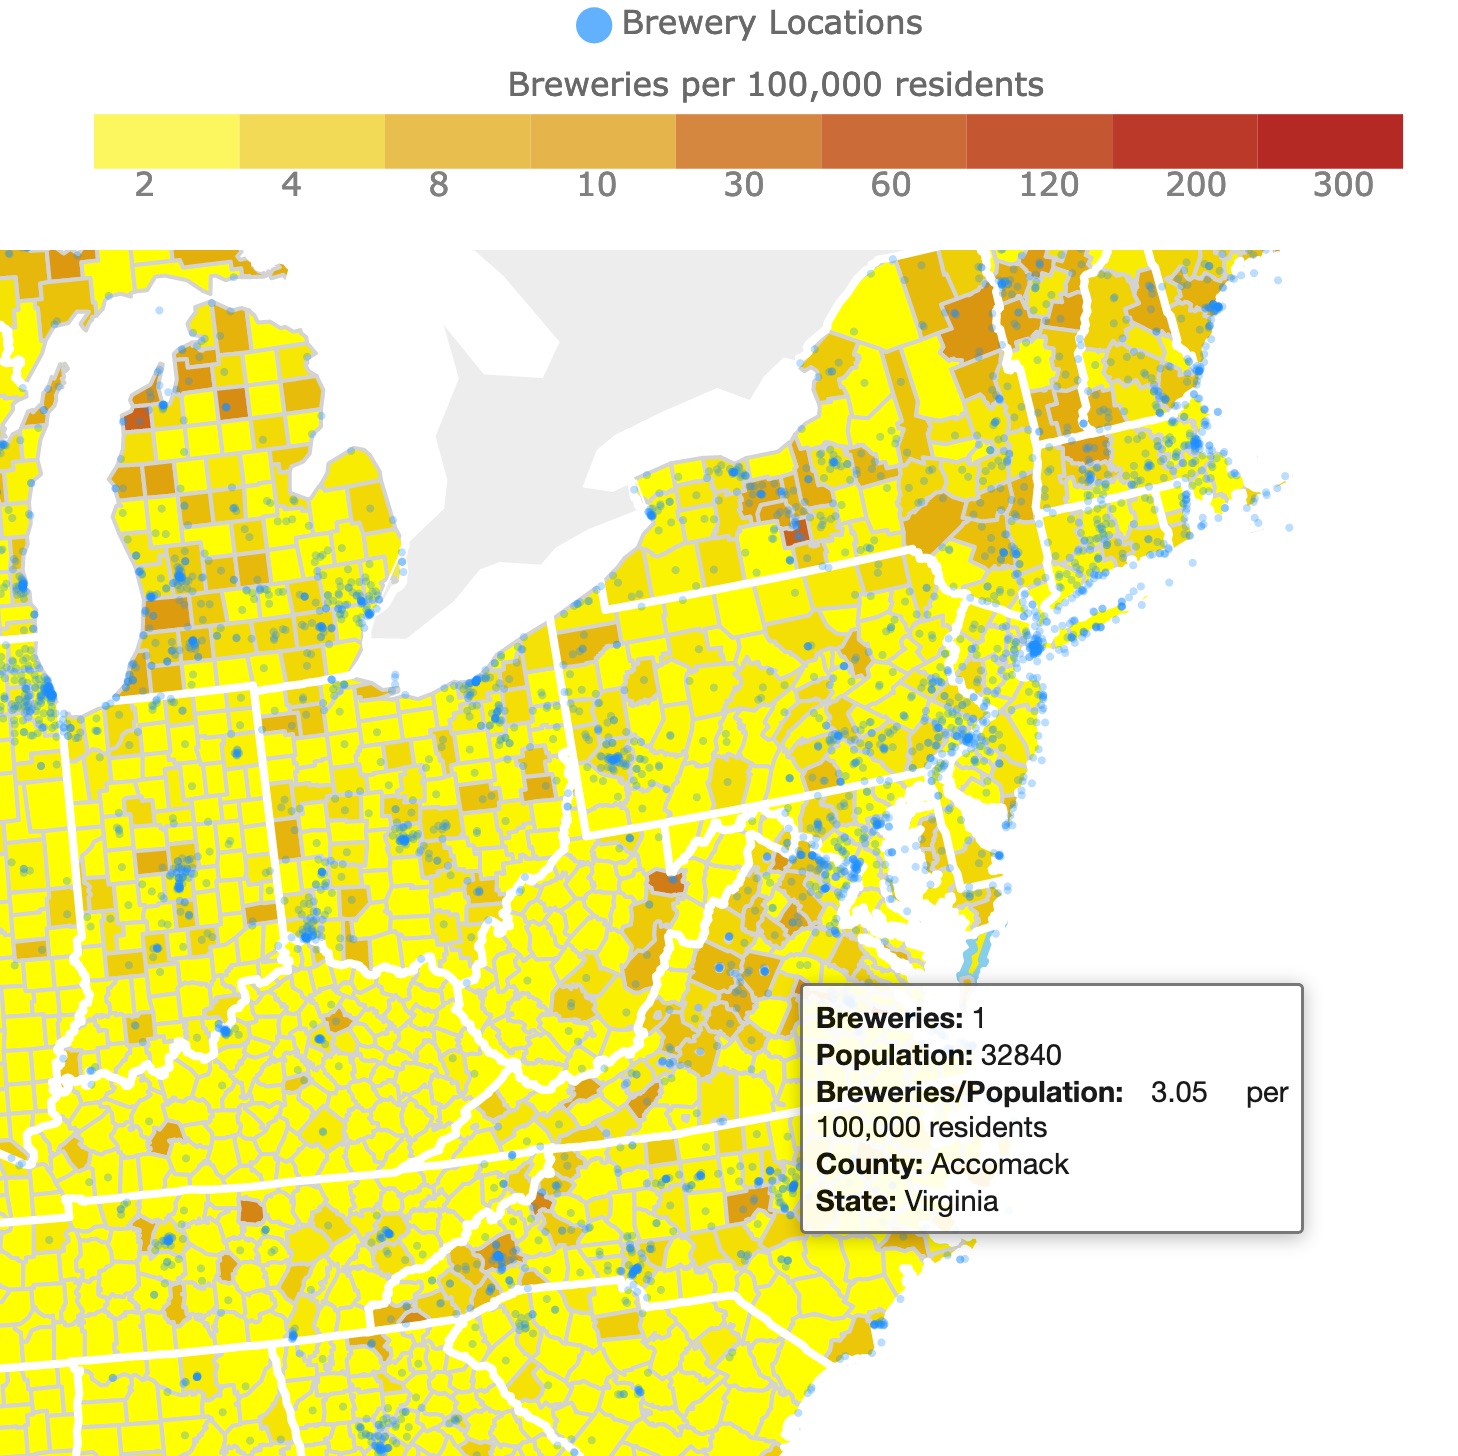 Breweries per capita and locations